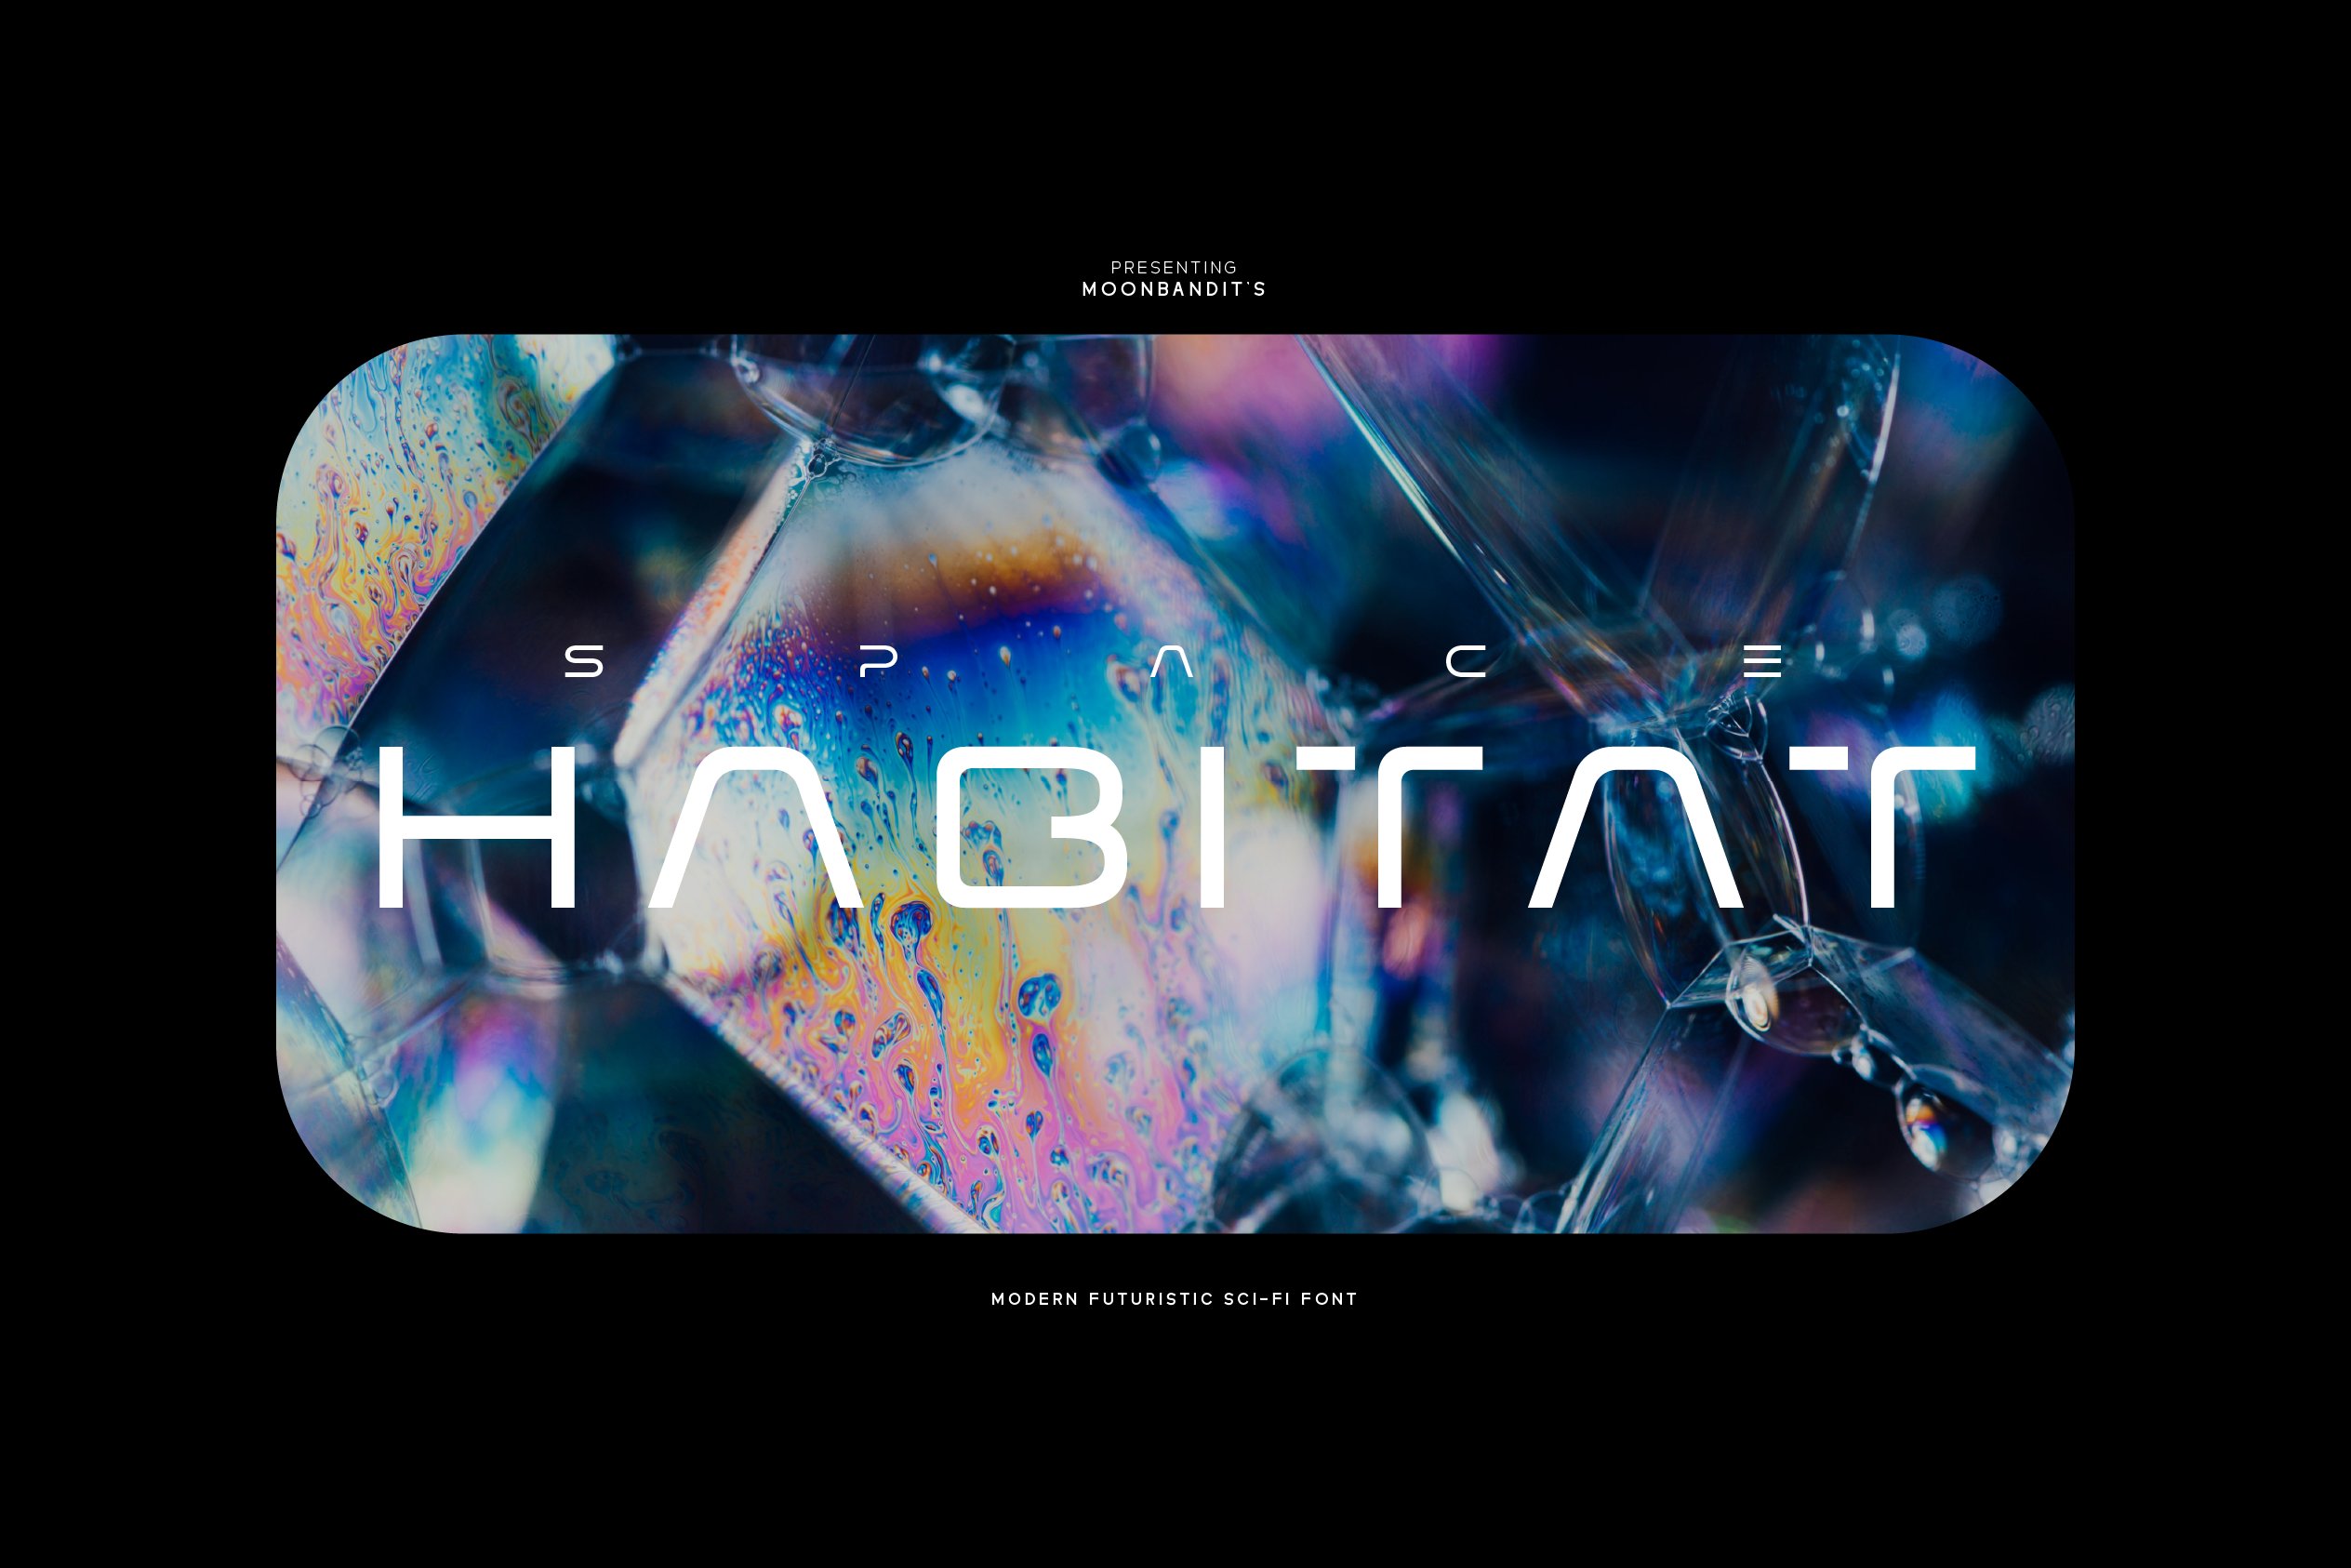 MBF Space Habitat - Scifi font cover image.